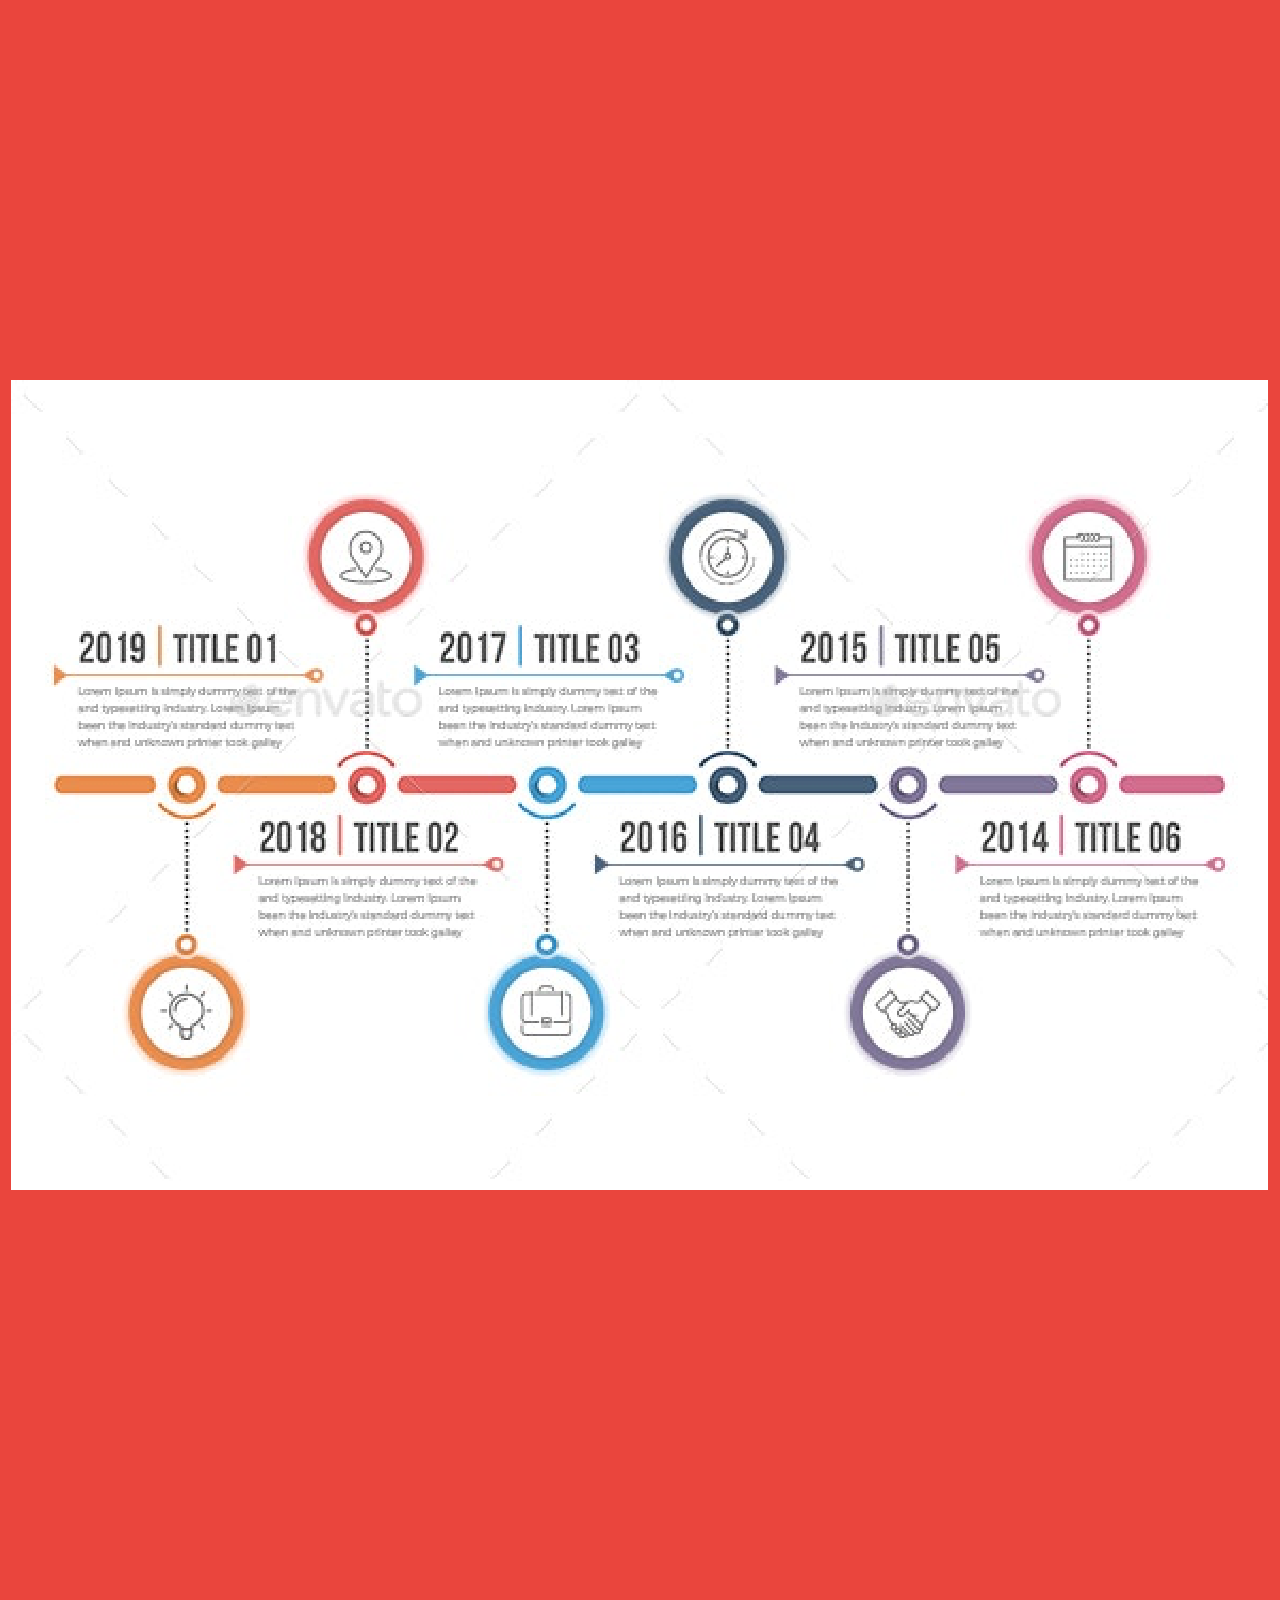 Timeline infographics pinterest image.